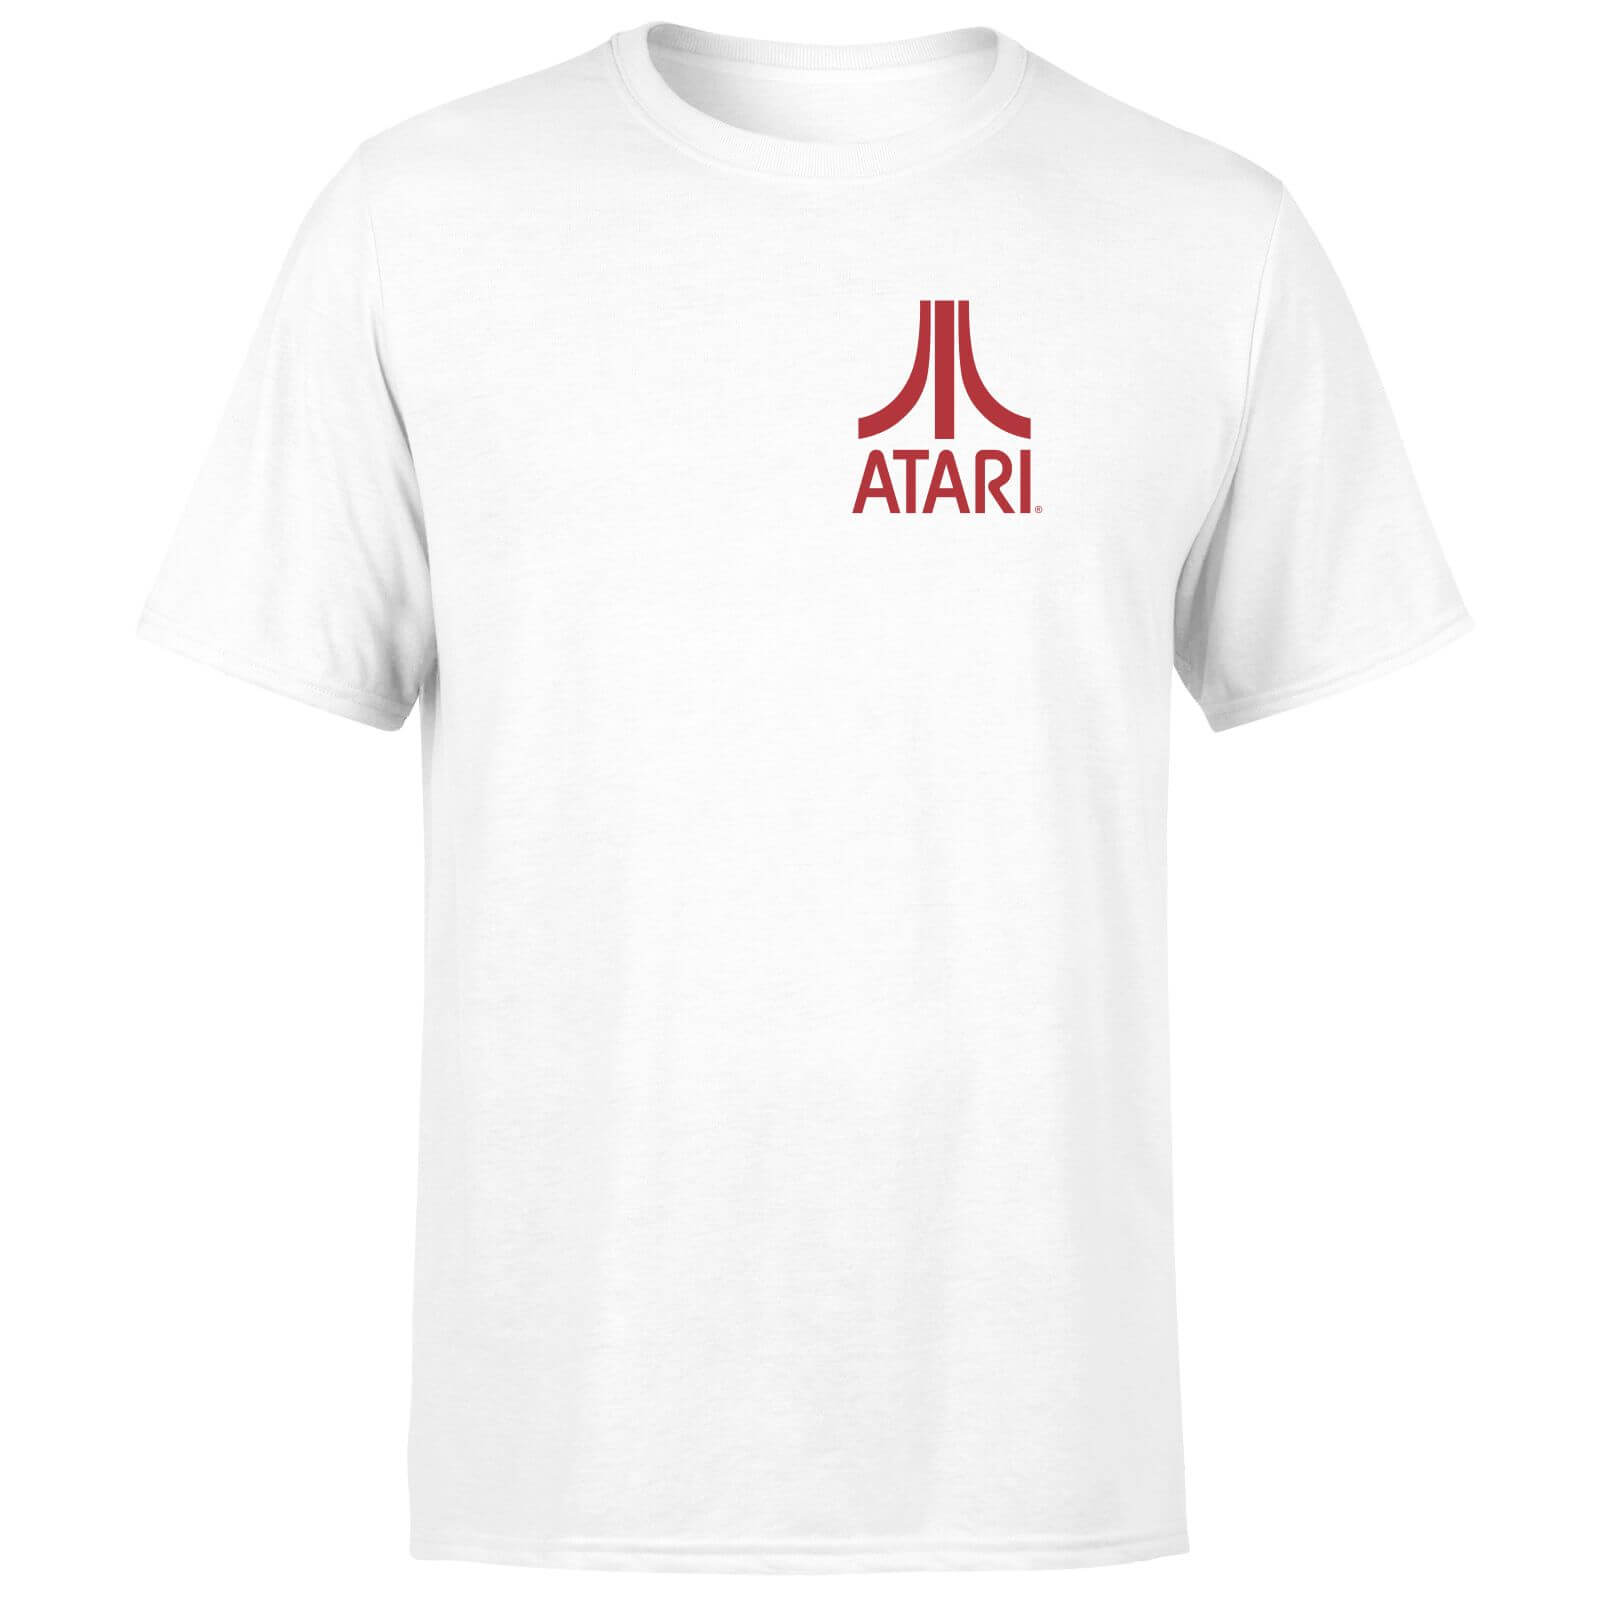 Atari White Tee Men's T-Shirt - White - S - White